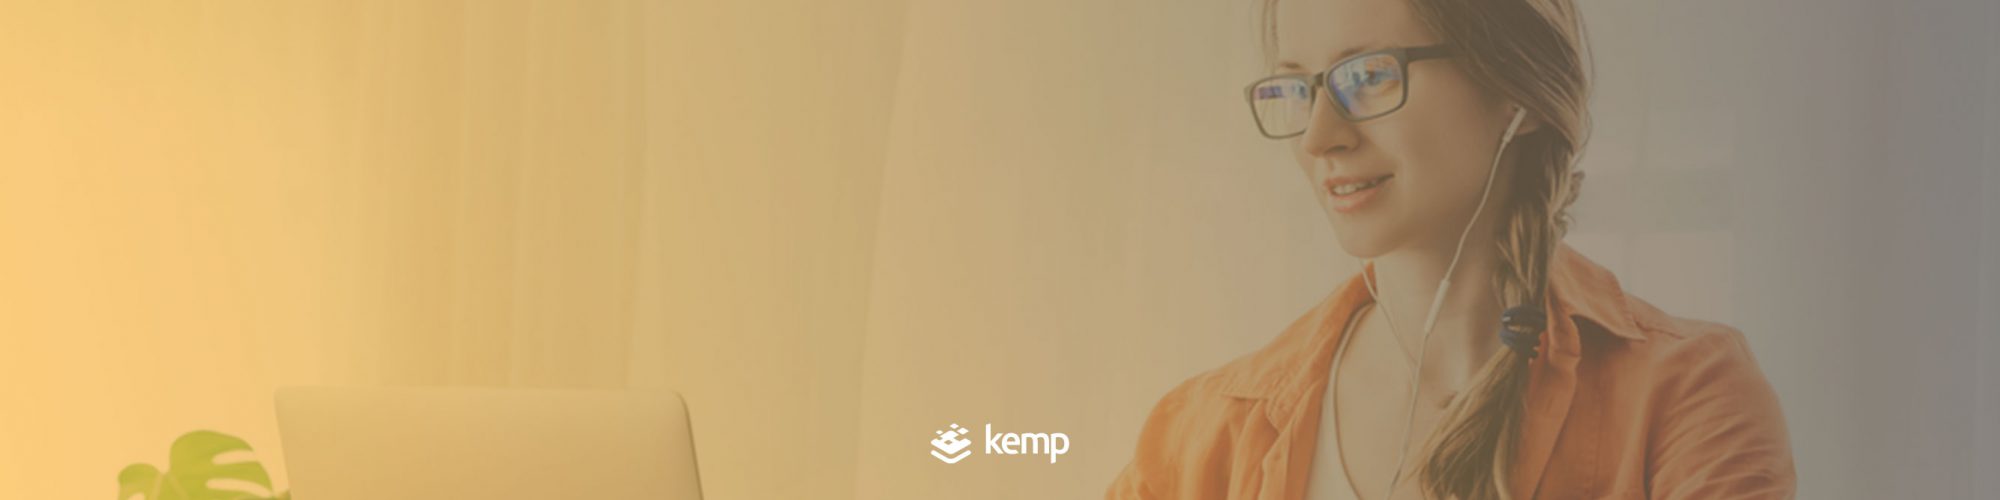 Load Balancing in Microsoft Azure with Kemp